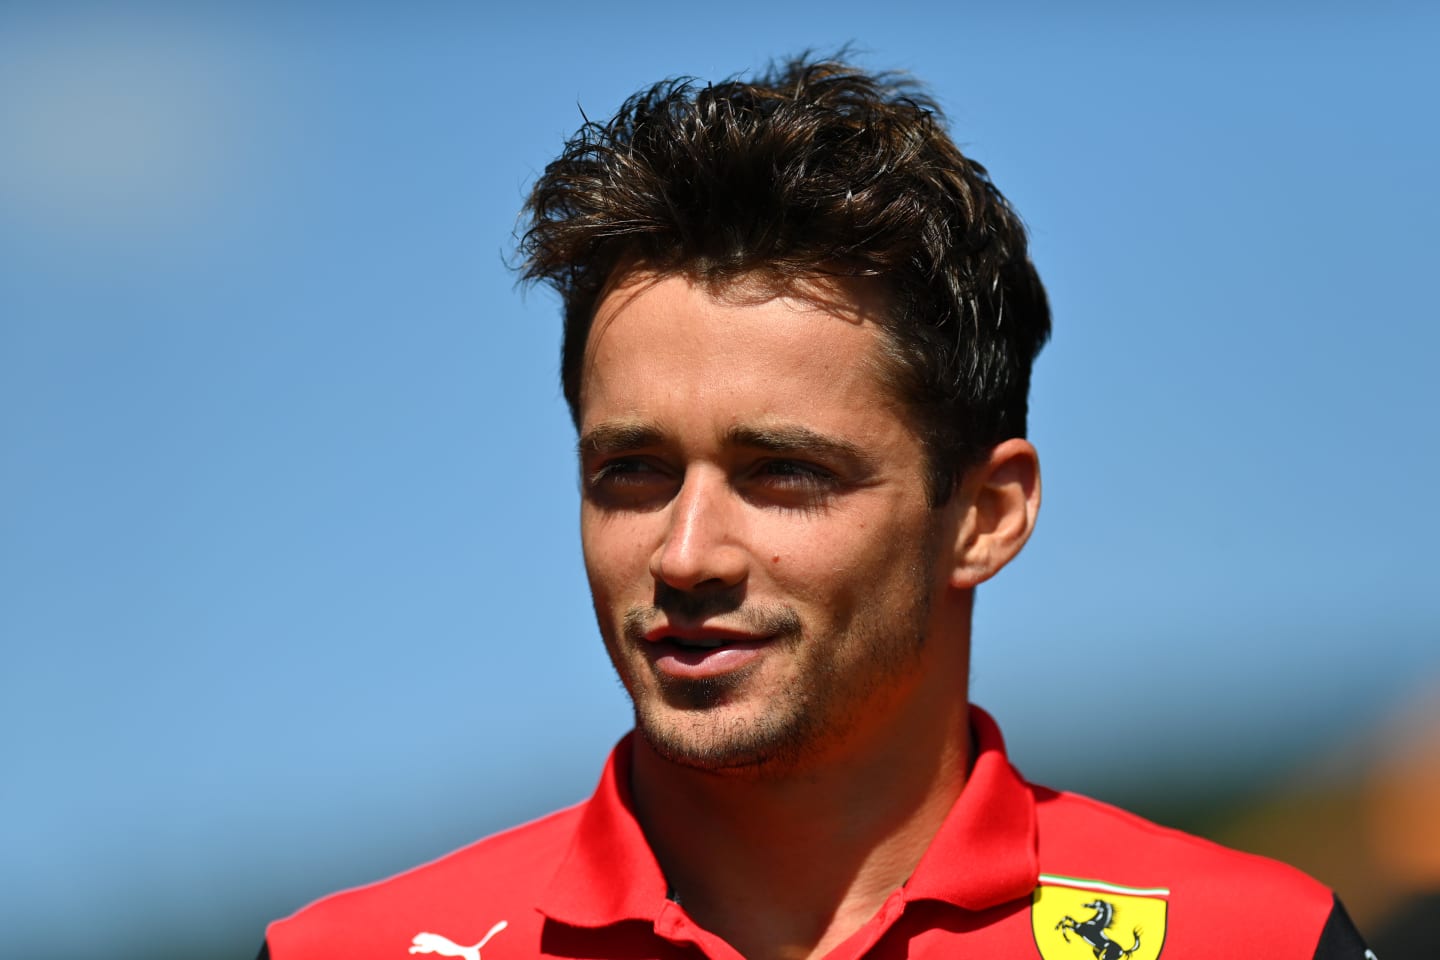 SPA, BELGIUM - AUGUST 25: Charles Leclerc of Monaco and Ferrari walks in the Paddock during